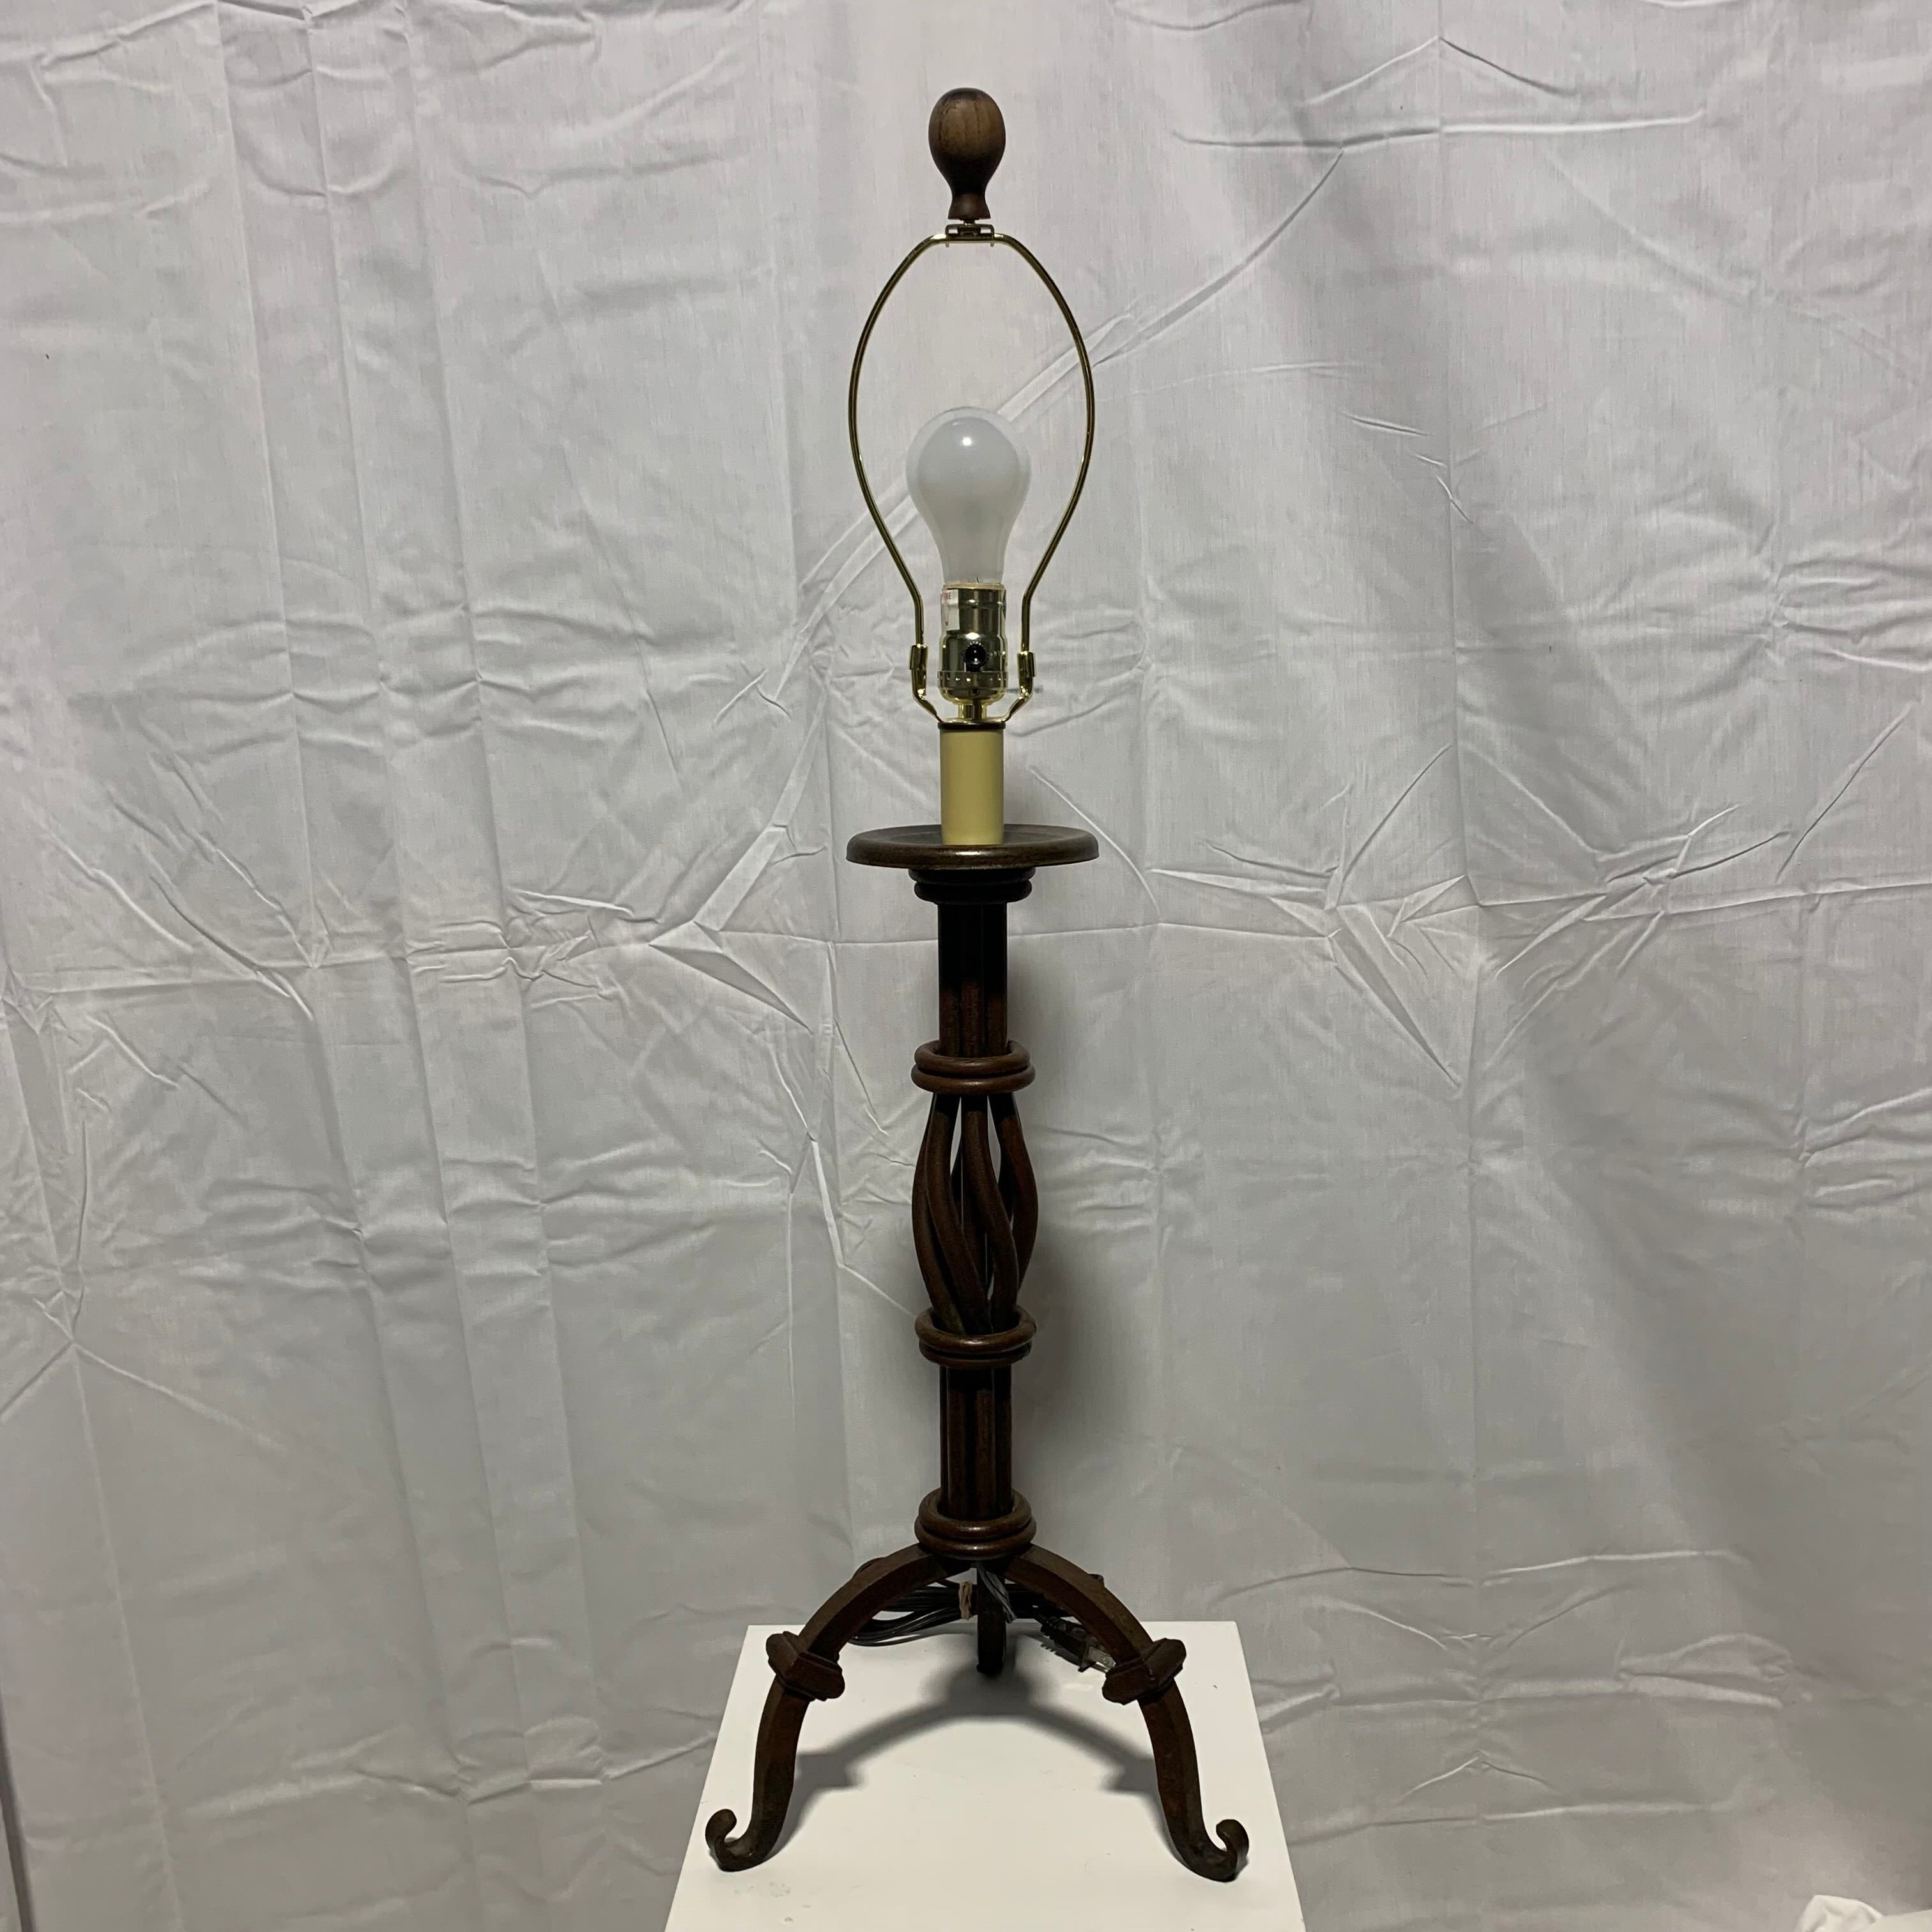 11" Diameter x 34" Rust Colored Iron 3 Legged Table Lamp